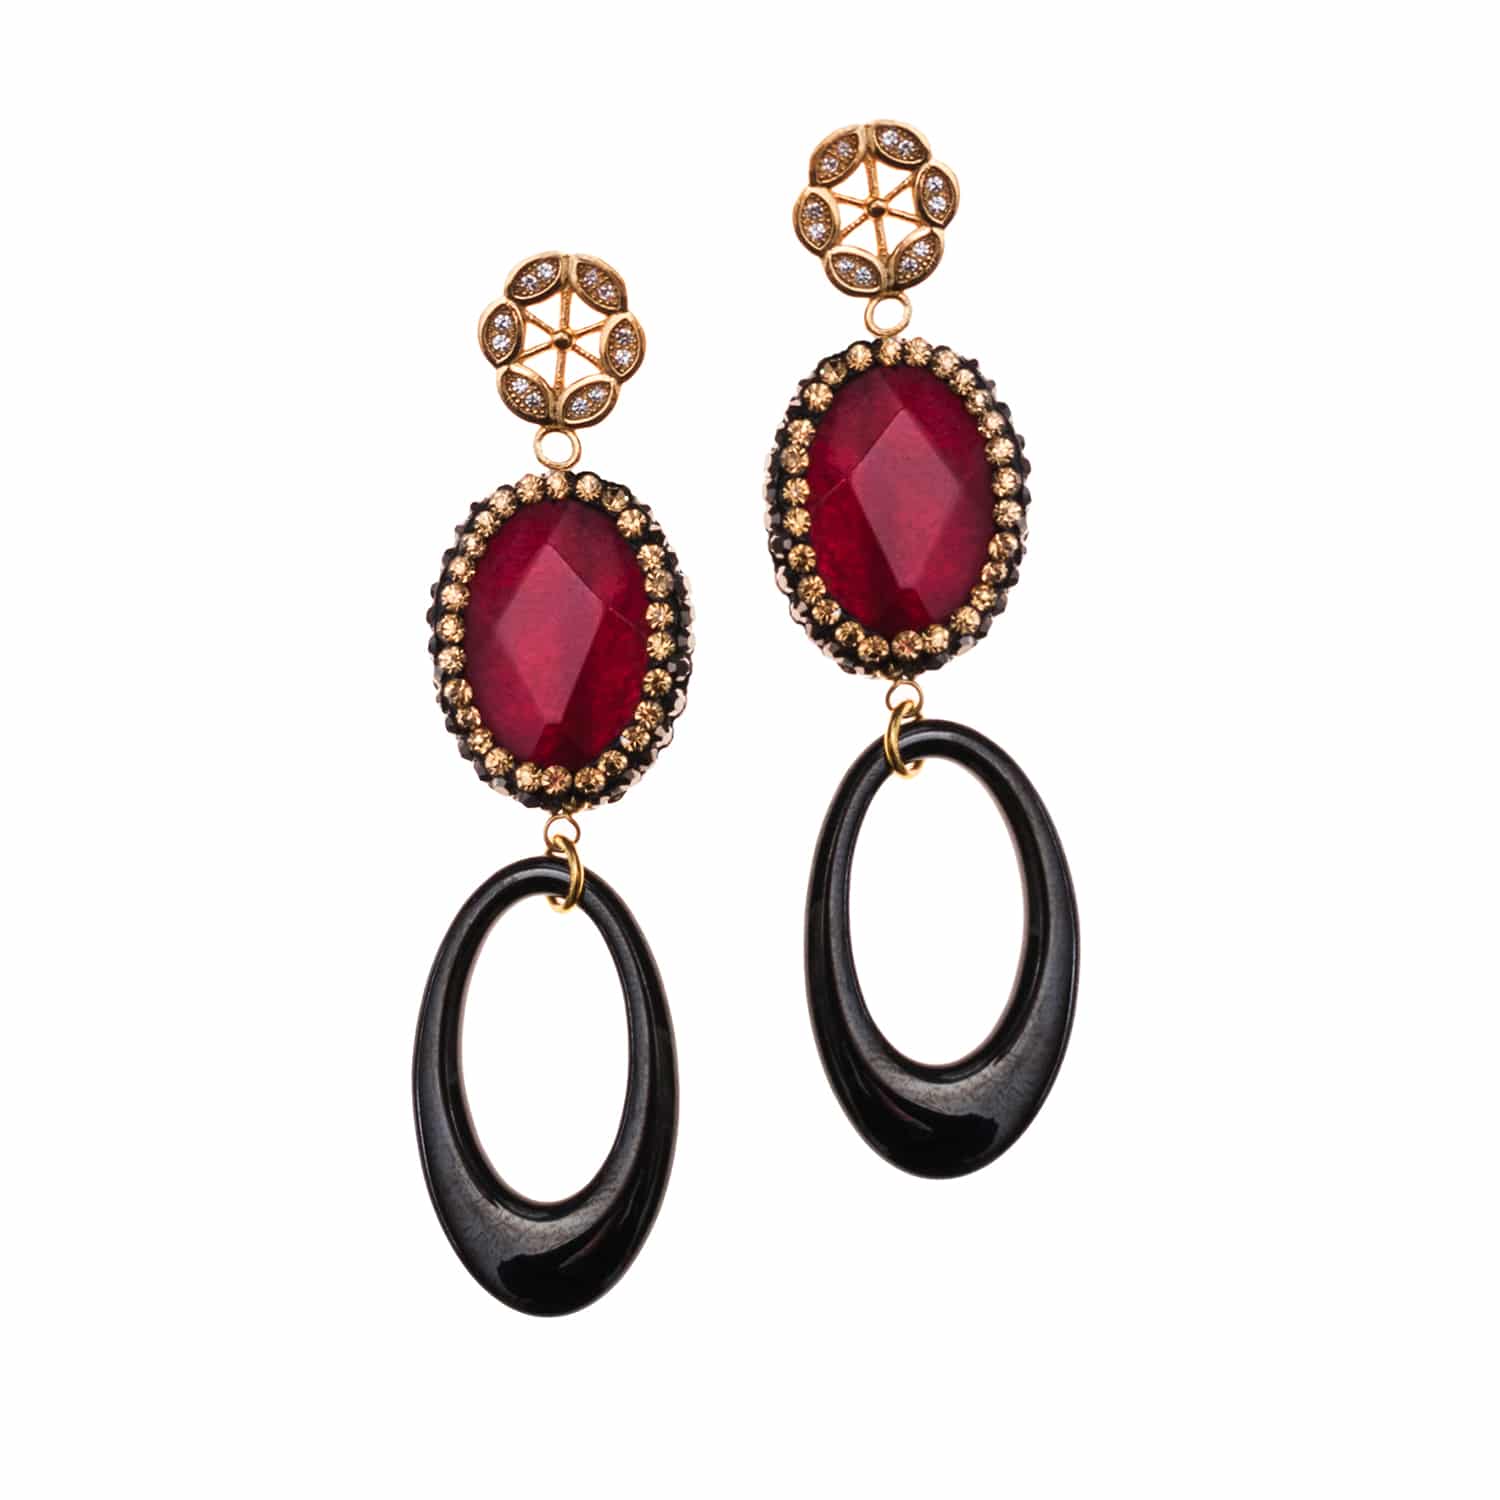 HONG BOCK design earrings made of red agate and black onyx